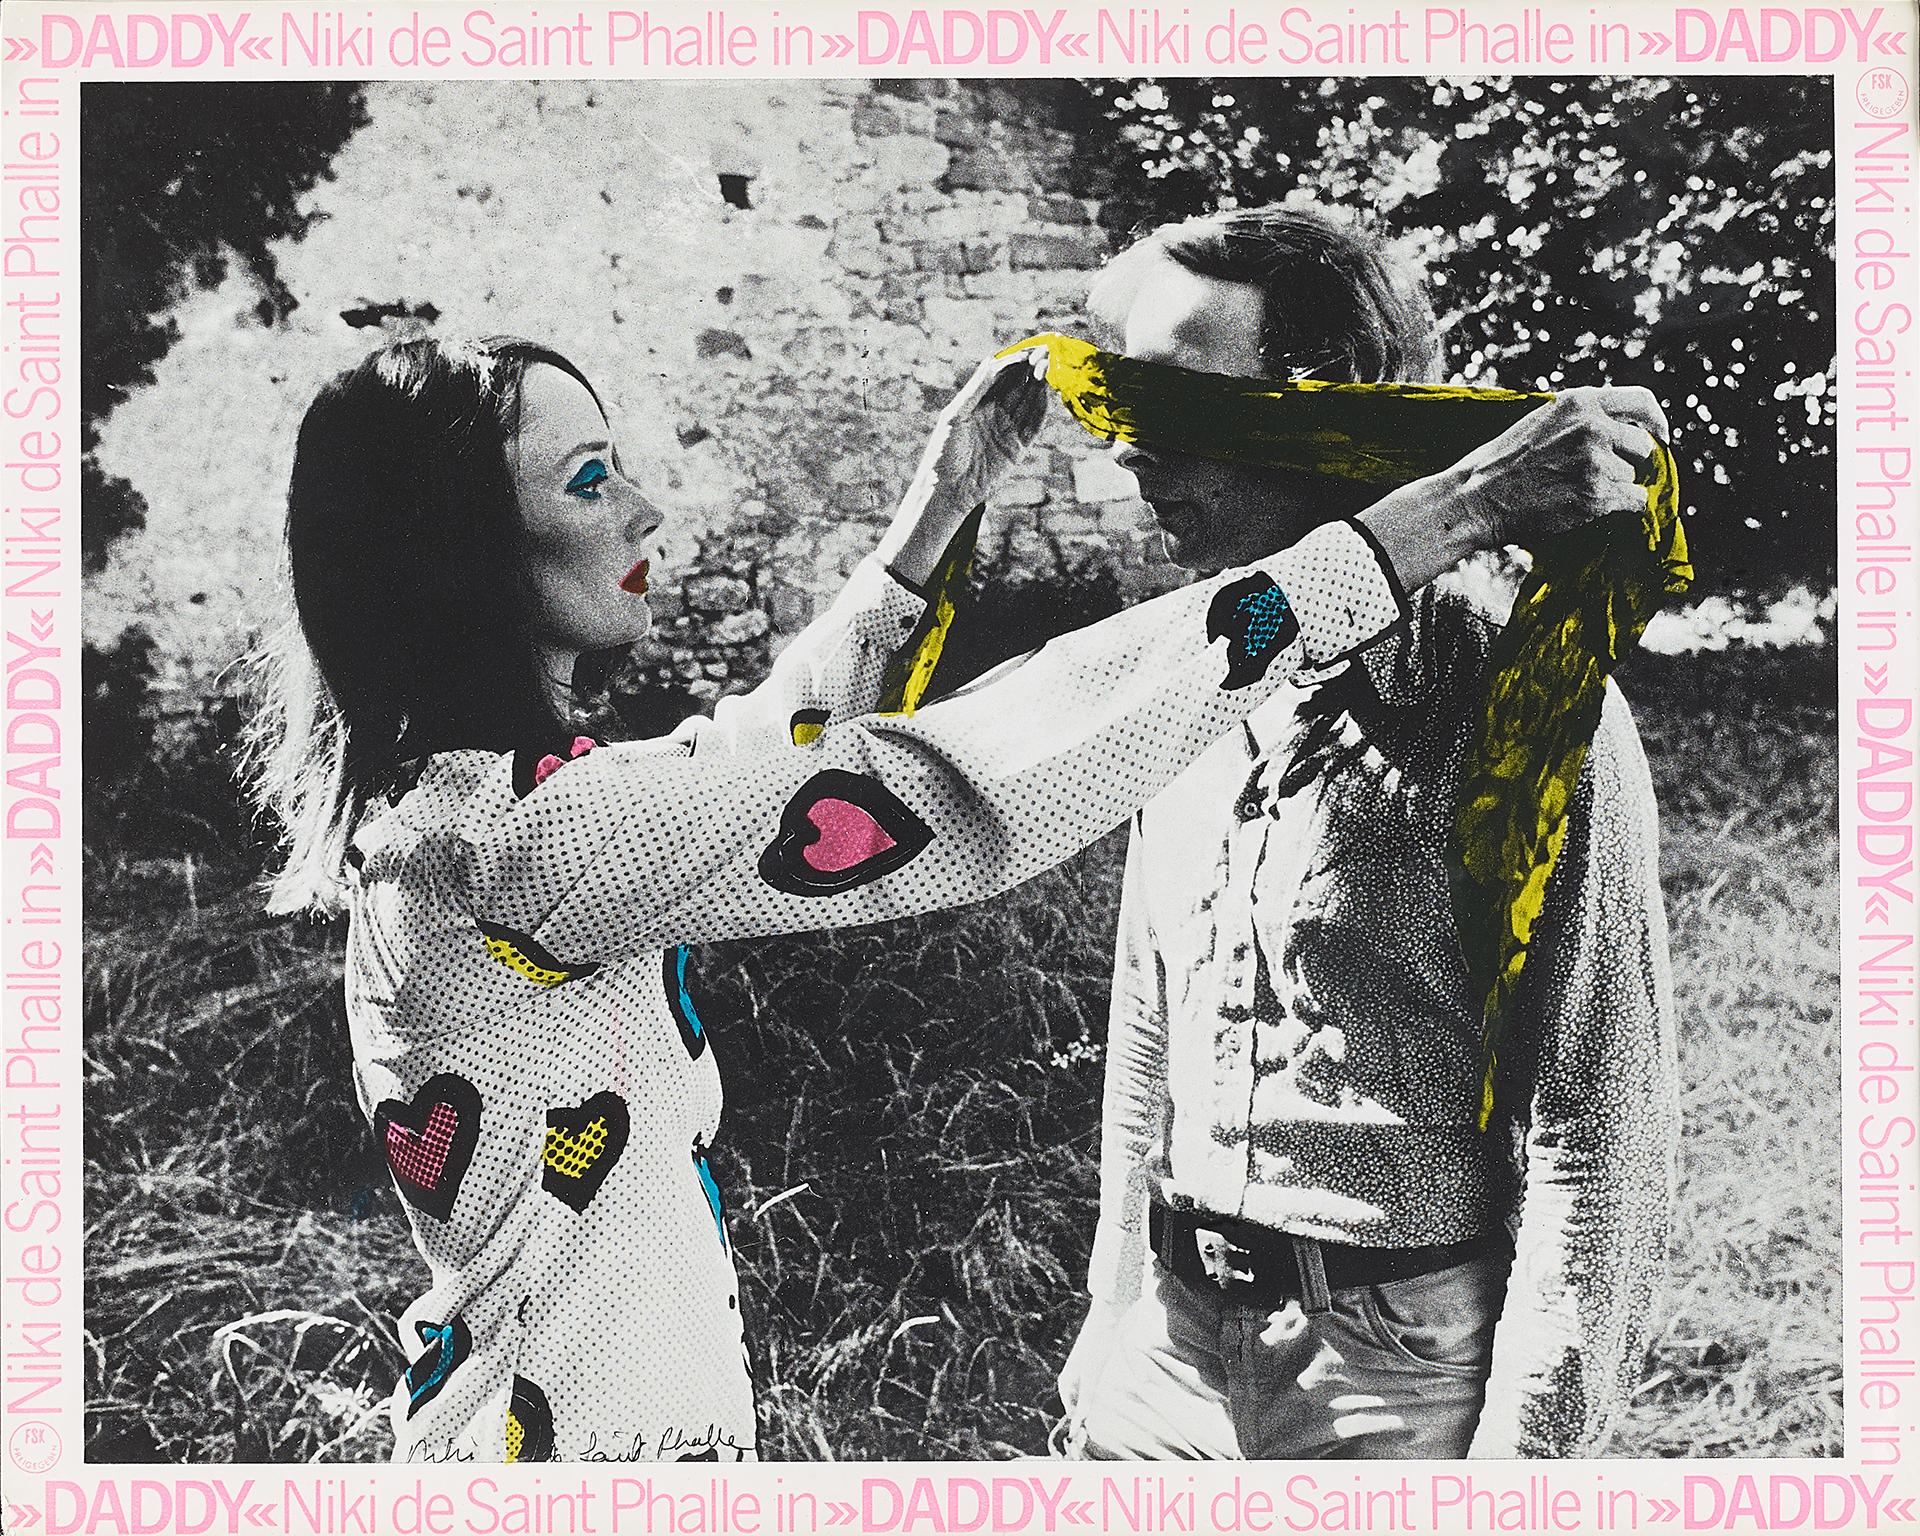 Daddy - Feminist Print by Niki de Saint Phalle